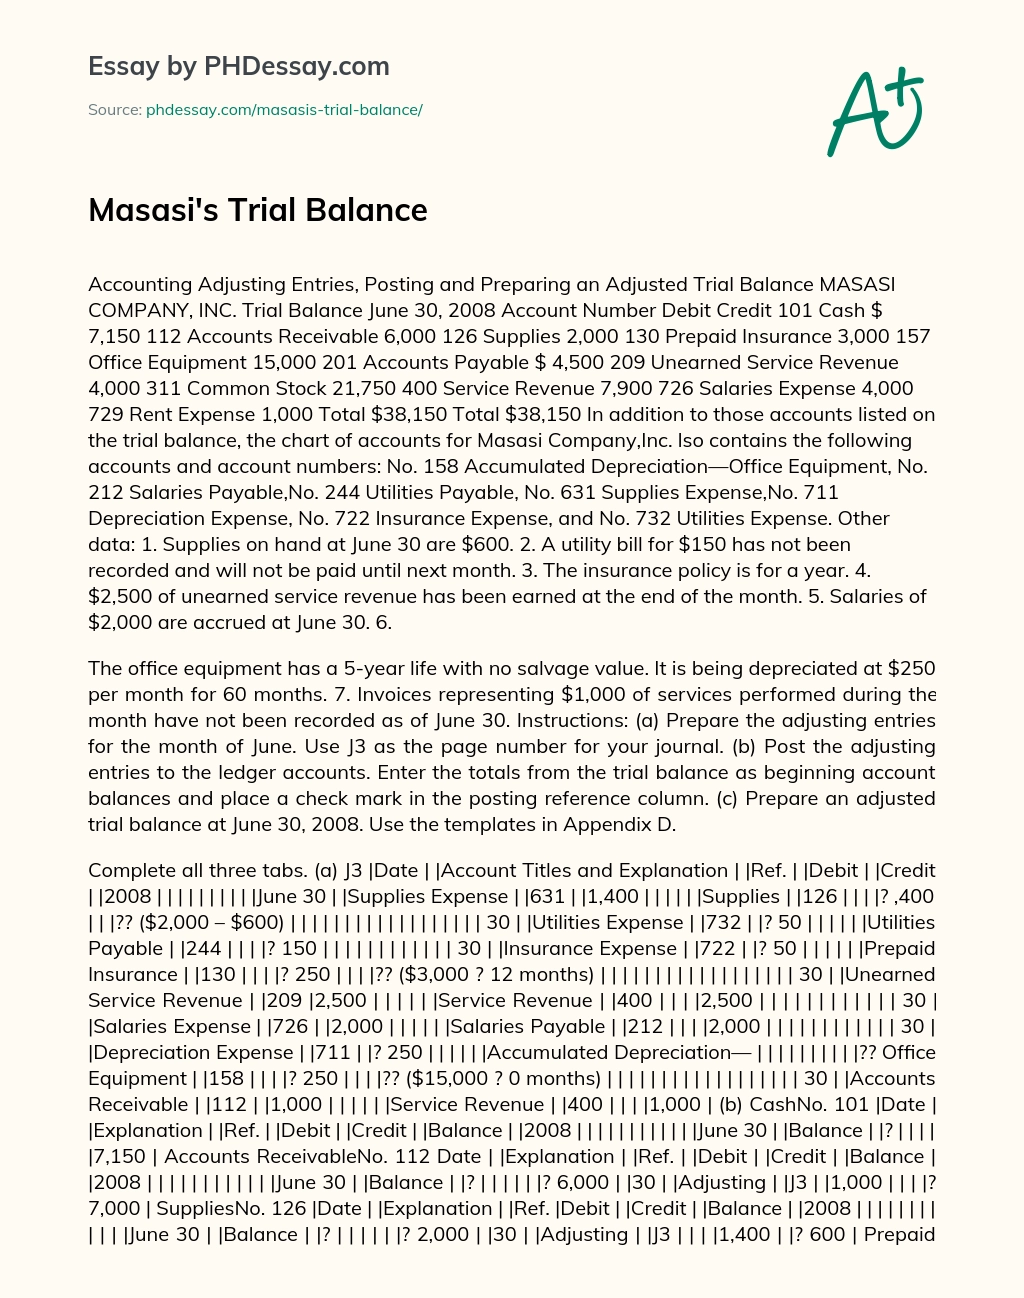 Masasi’s Trial Balance essay